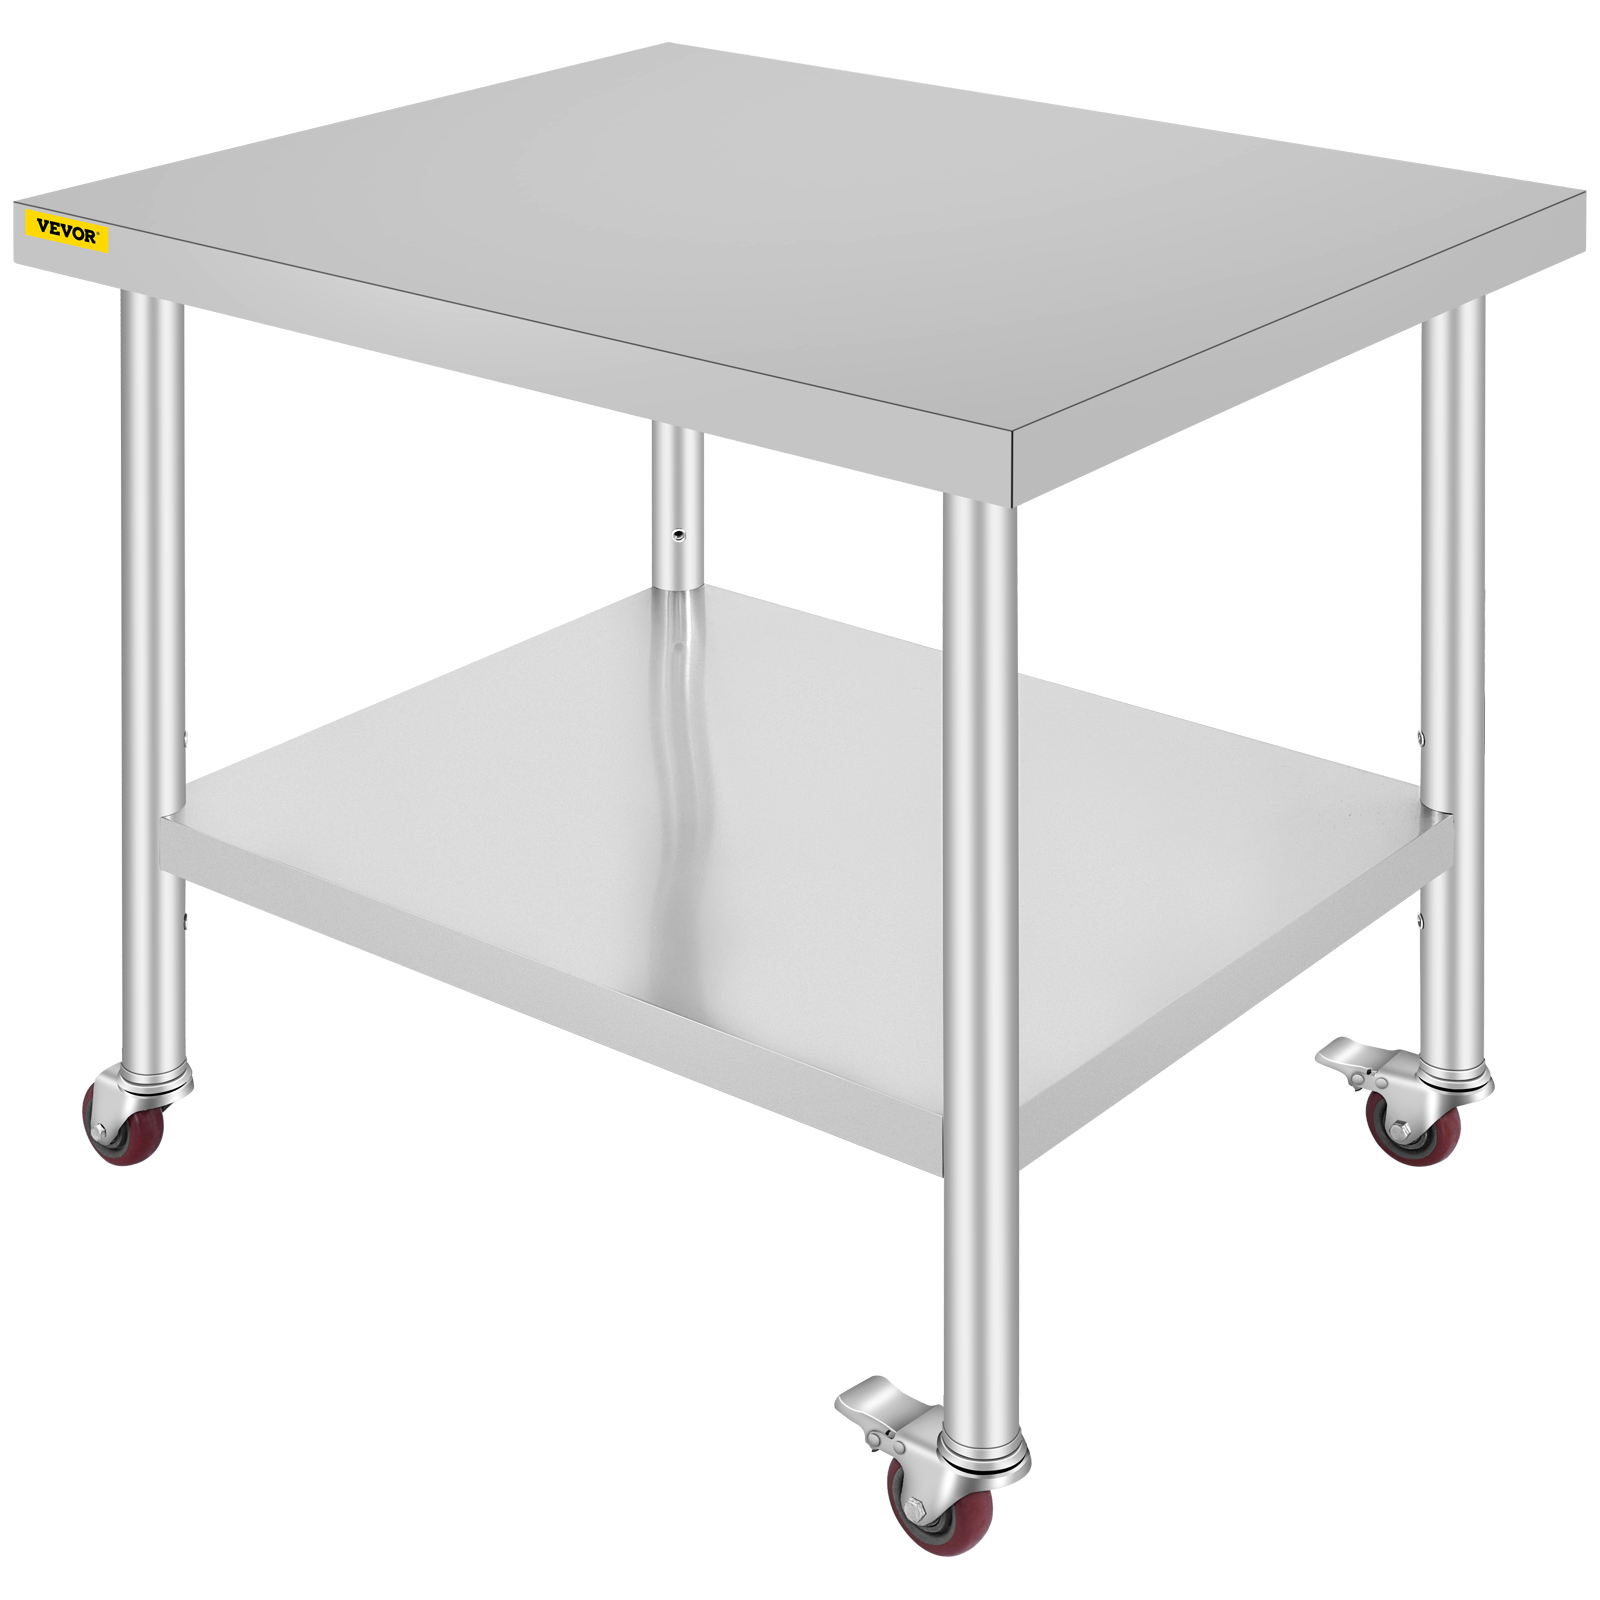 30"x36" restaurant Work Prep Table W/wheels Rolling Adjustable Undershelf Food от Vevor Many GEOs